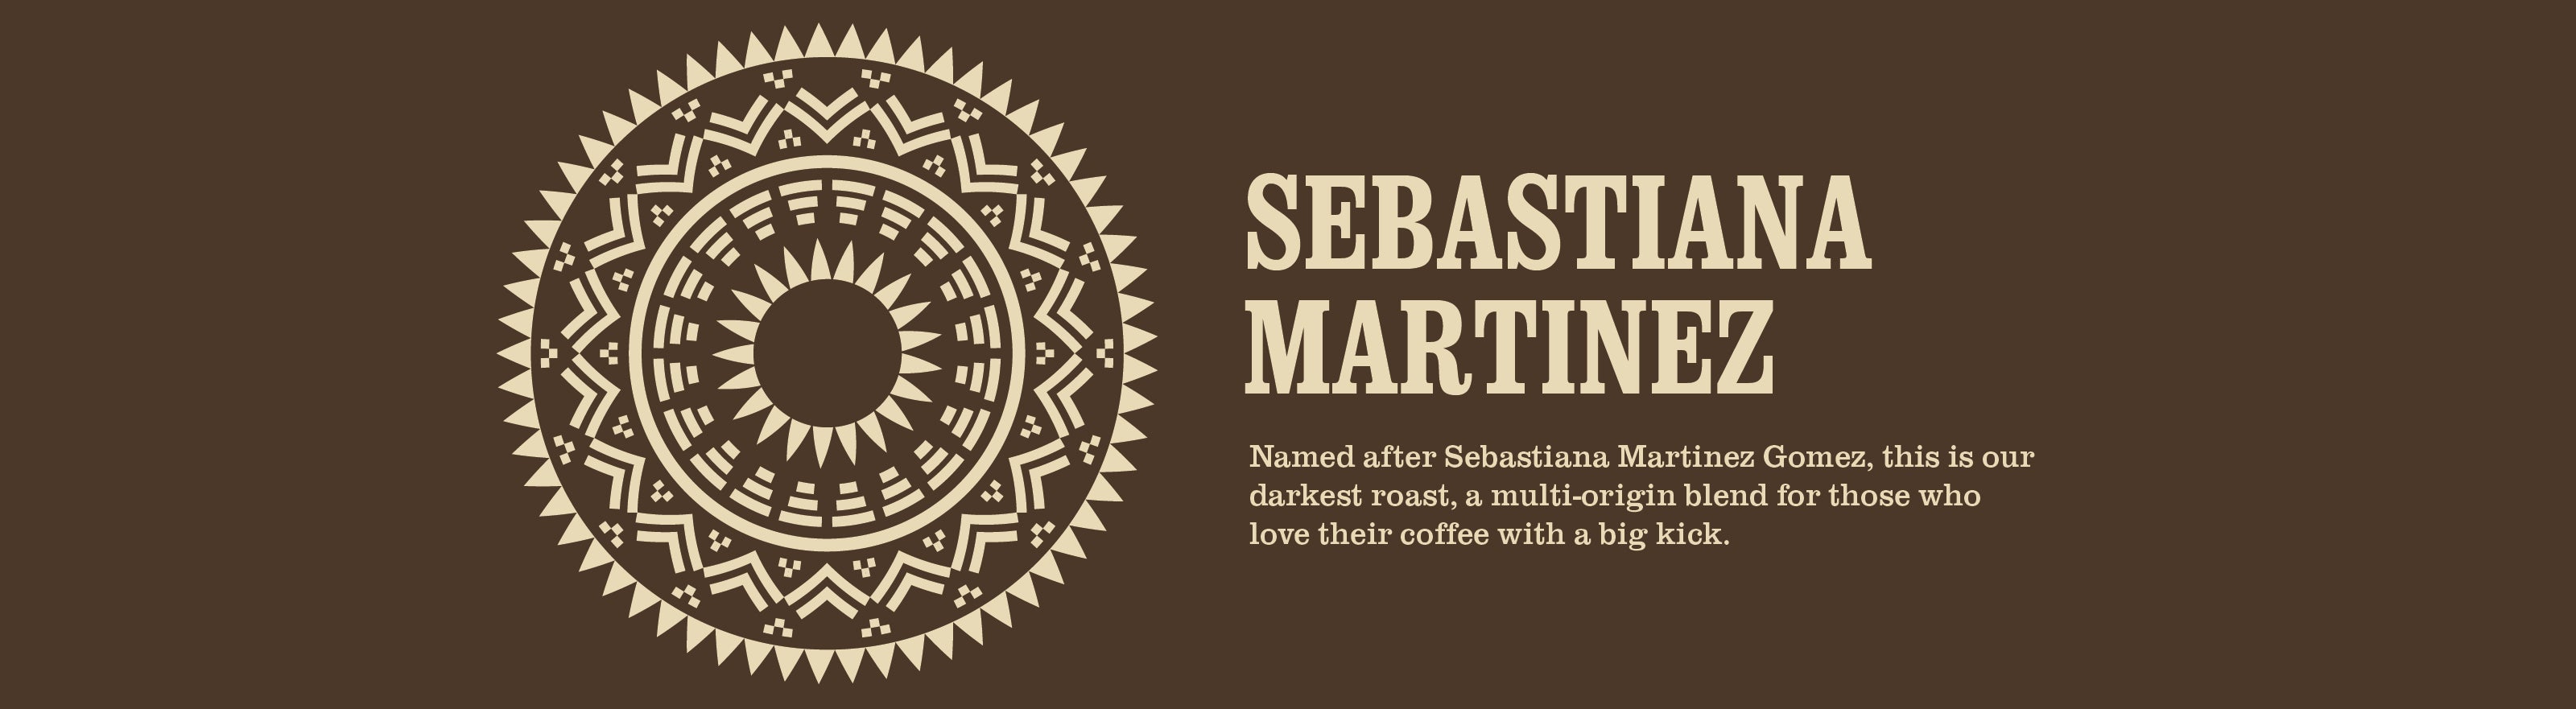 sebastiana martinez coffee informational image